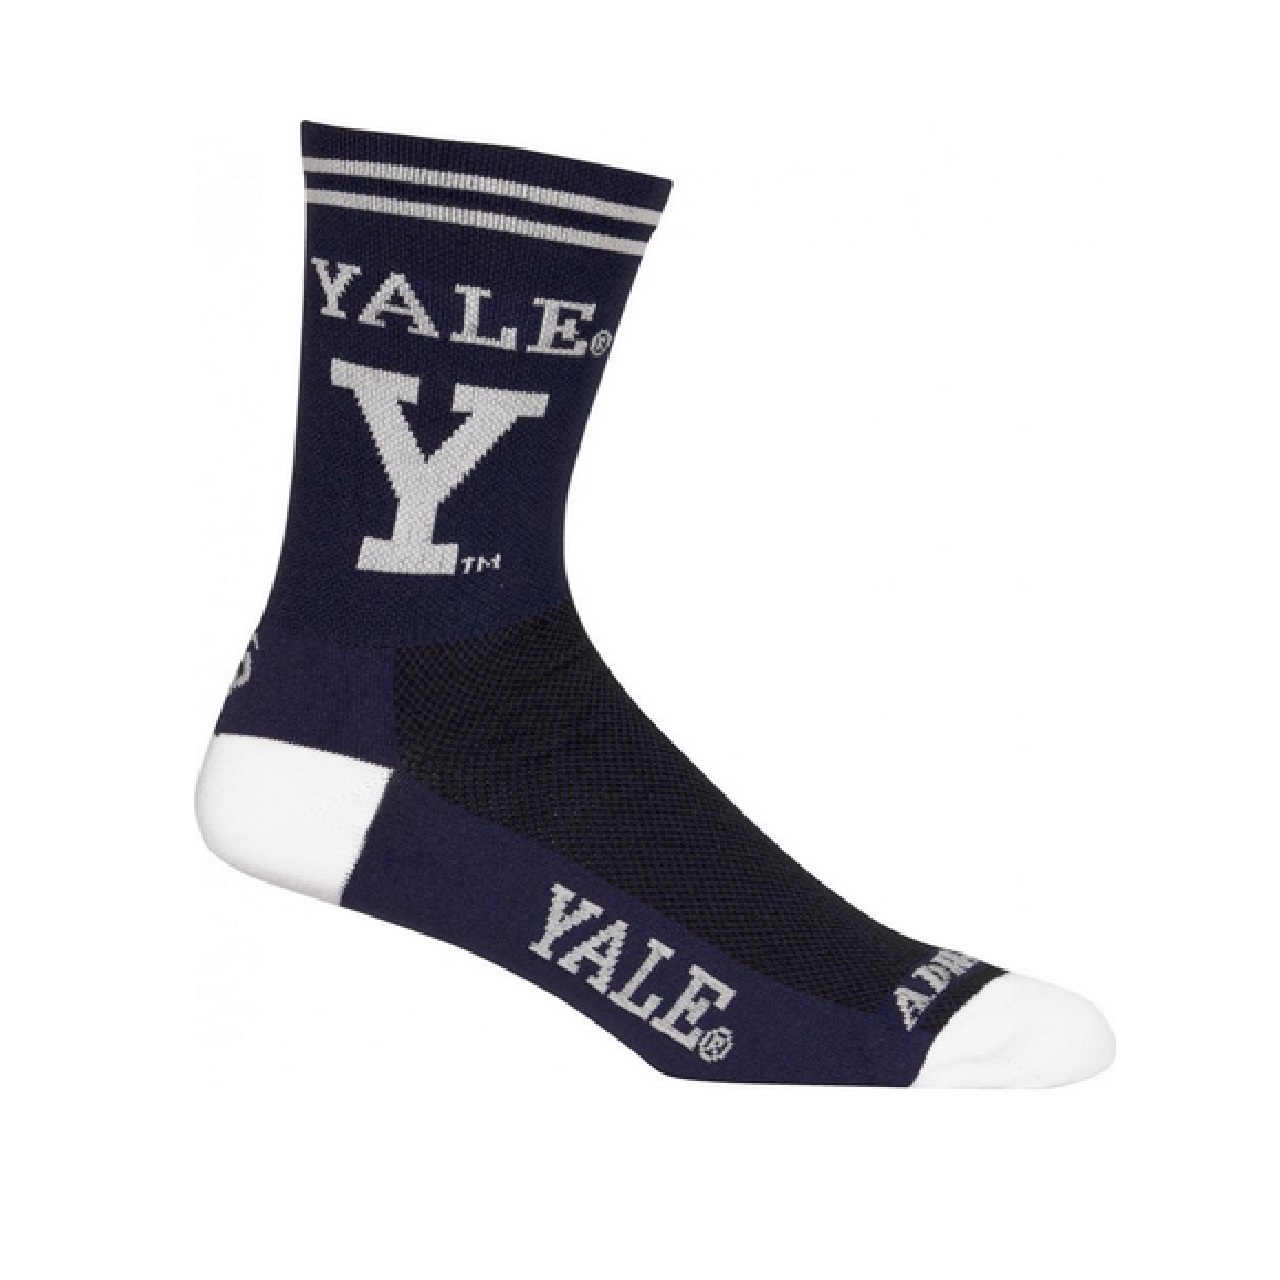 Yale University crew length-5" Multi Purpose Cycling  Socks